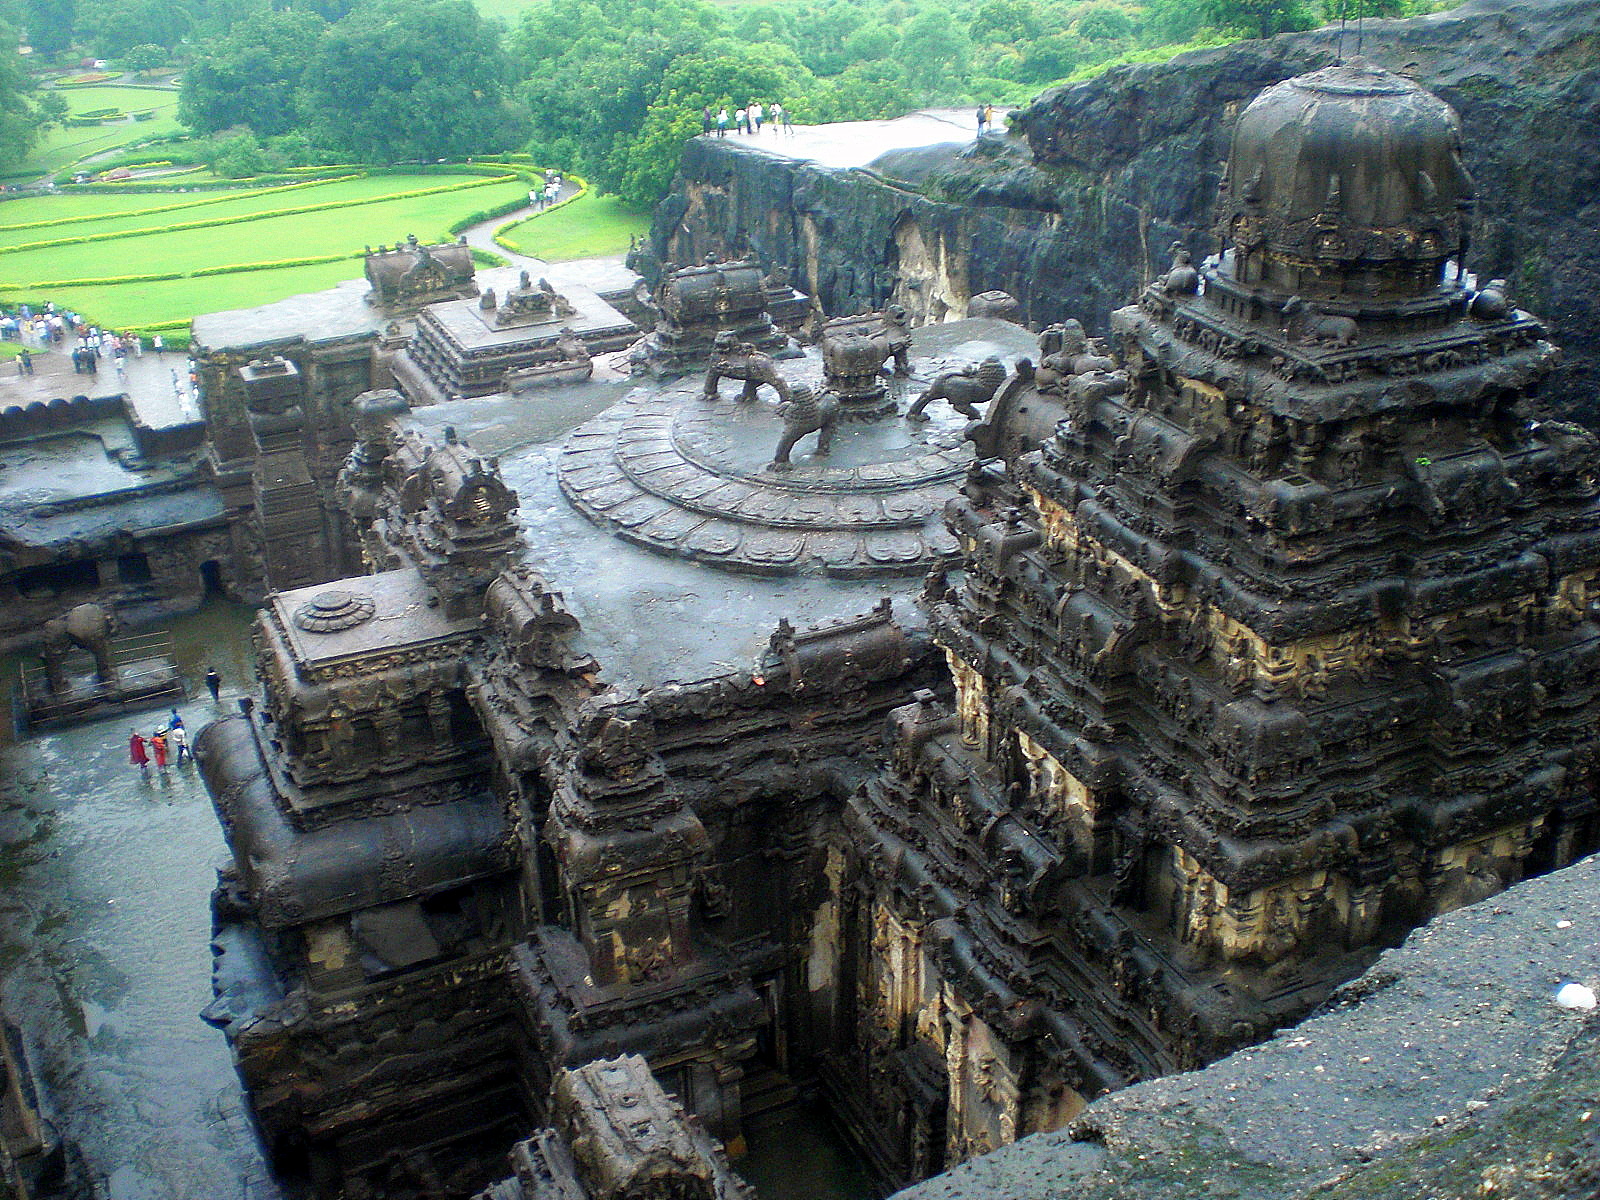 kailasanatha temple ellora